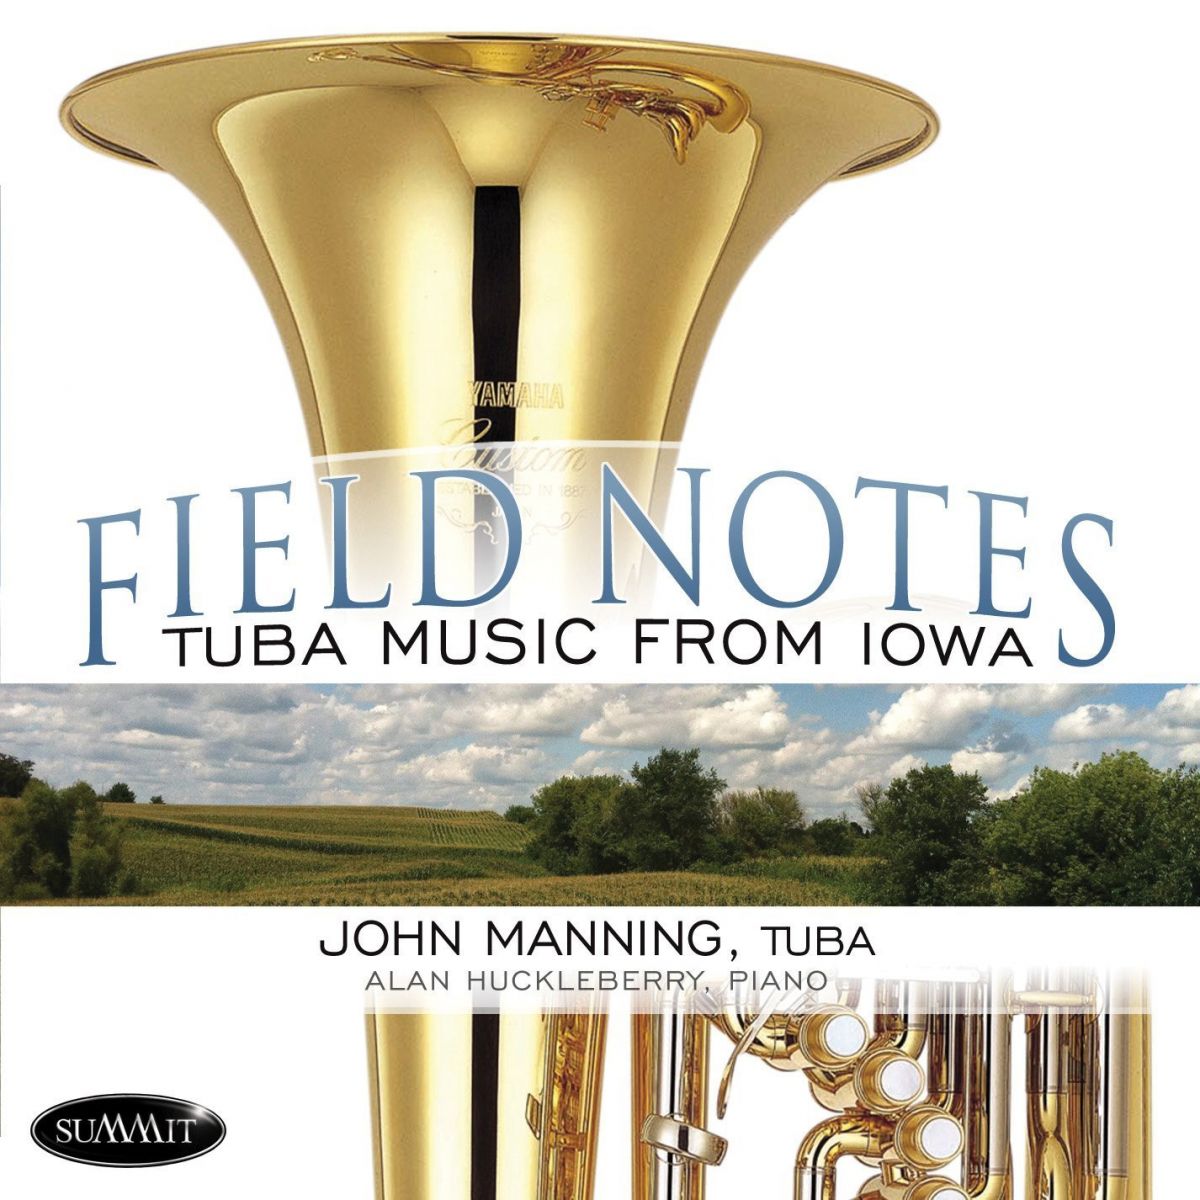  Tuba Music from Iowa" cover